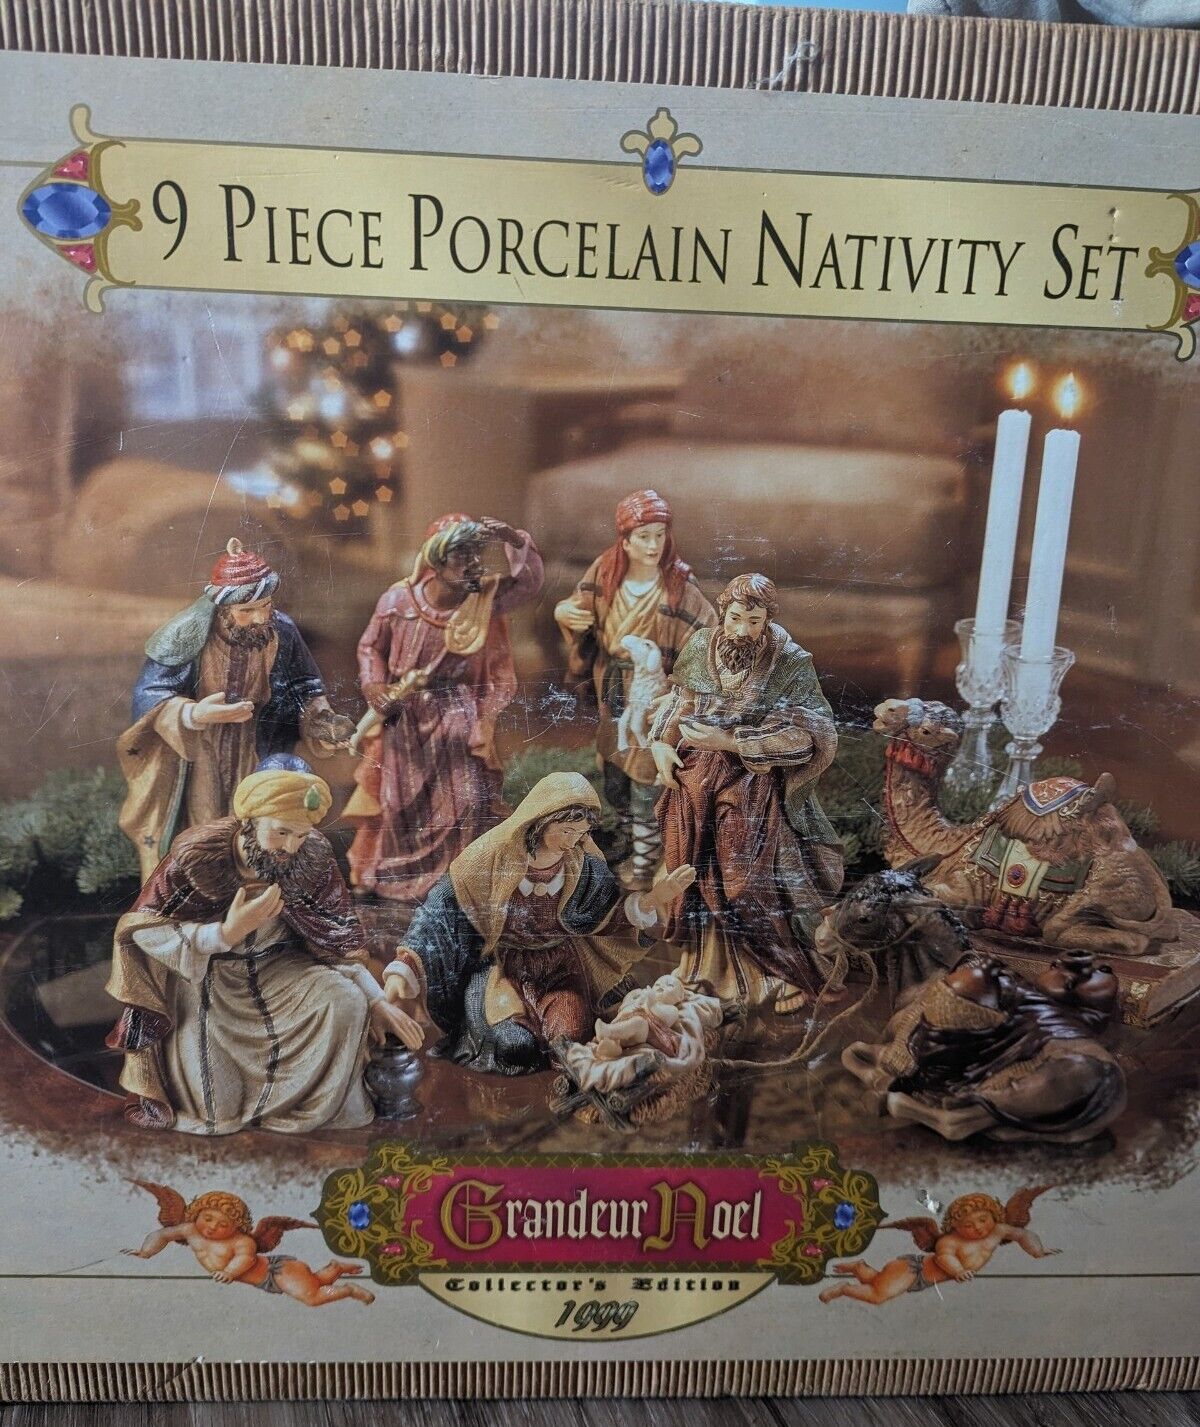 Vtg 1999 Grandeur Noel Collectors Edition 9 Piece Porcelain Nativity Set Large